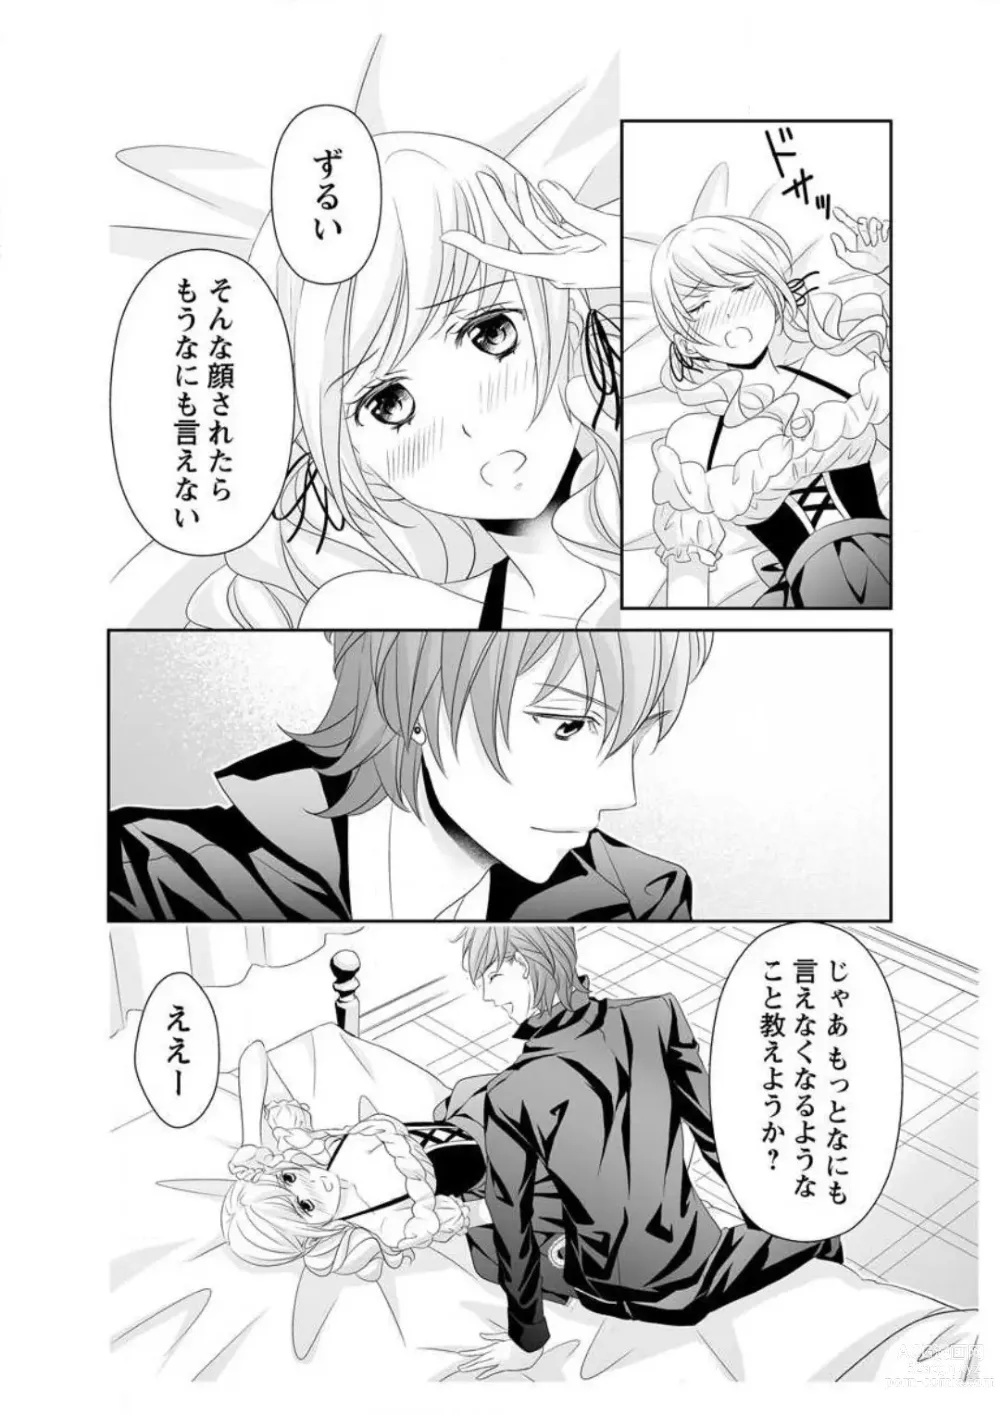 Page 227 of manga Ero ◆ Meruhen Aoi Tori 1-10